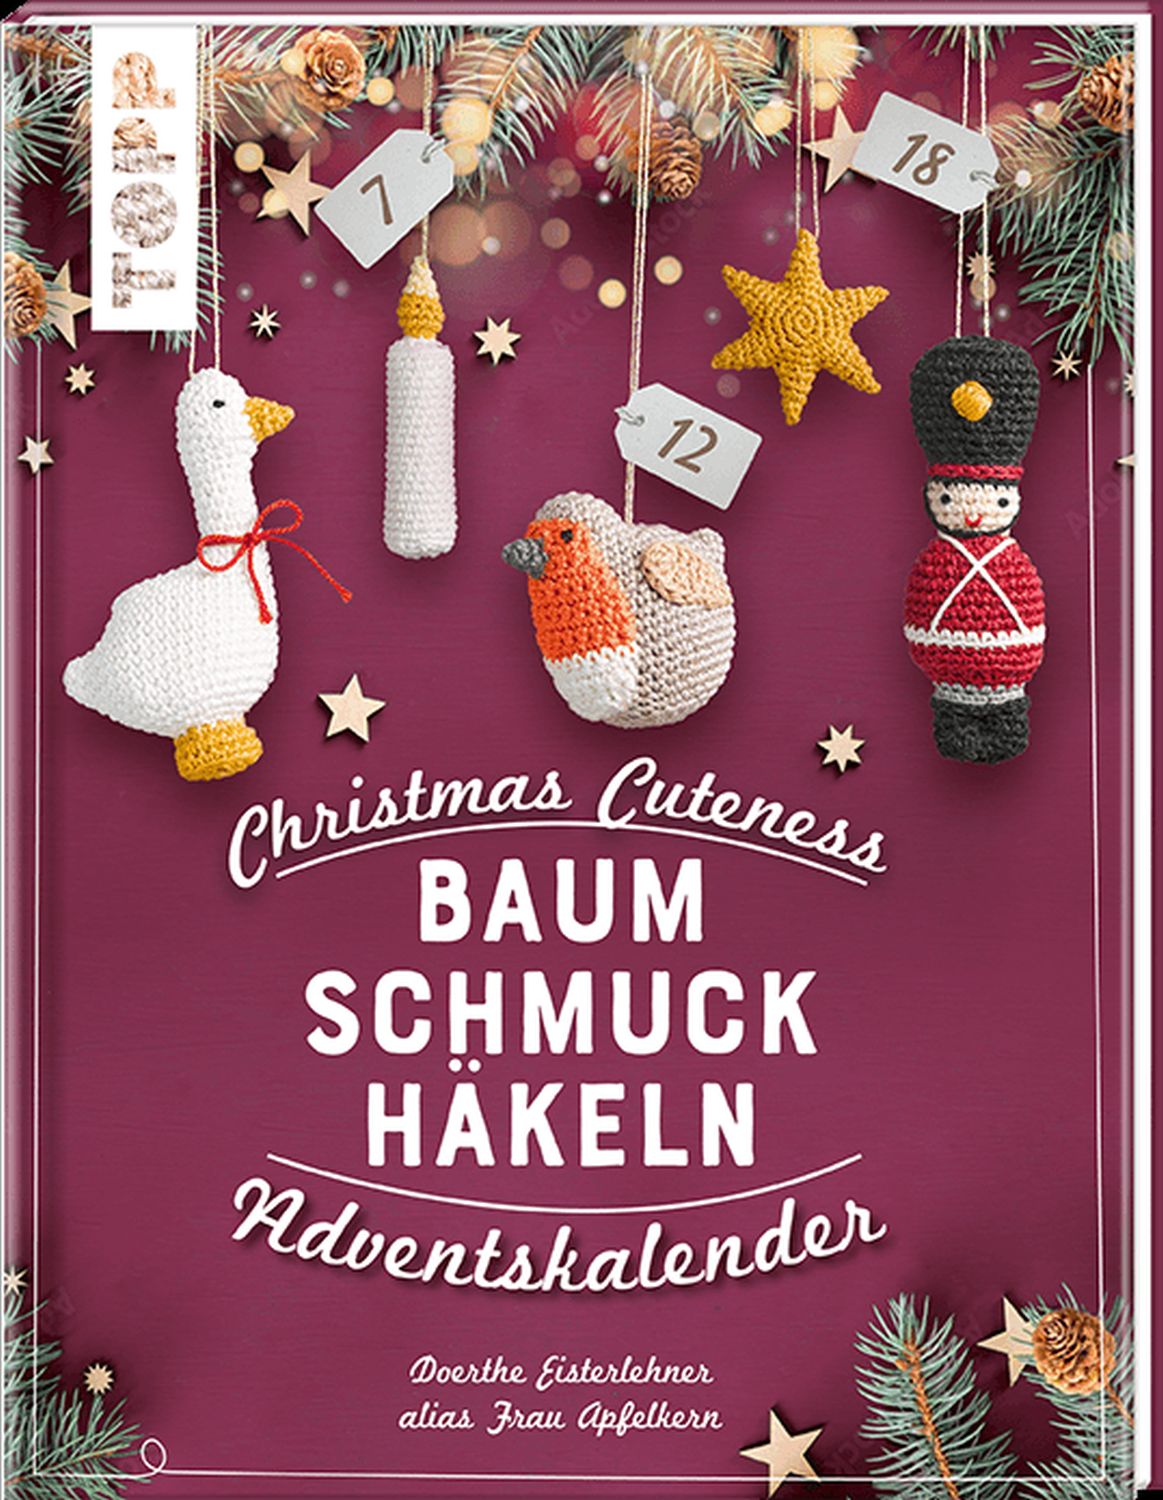 Baumschmuck häkeln - Adventskalender, 57048